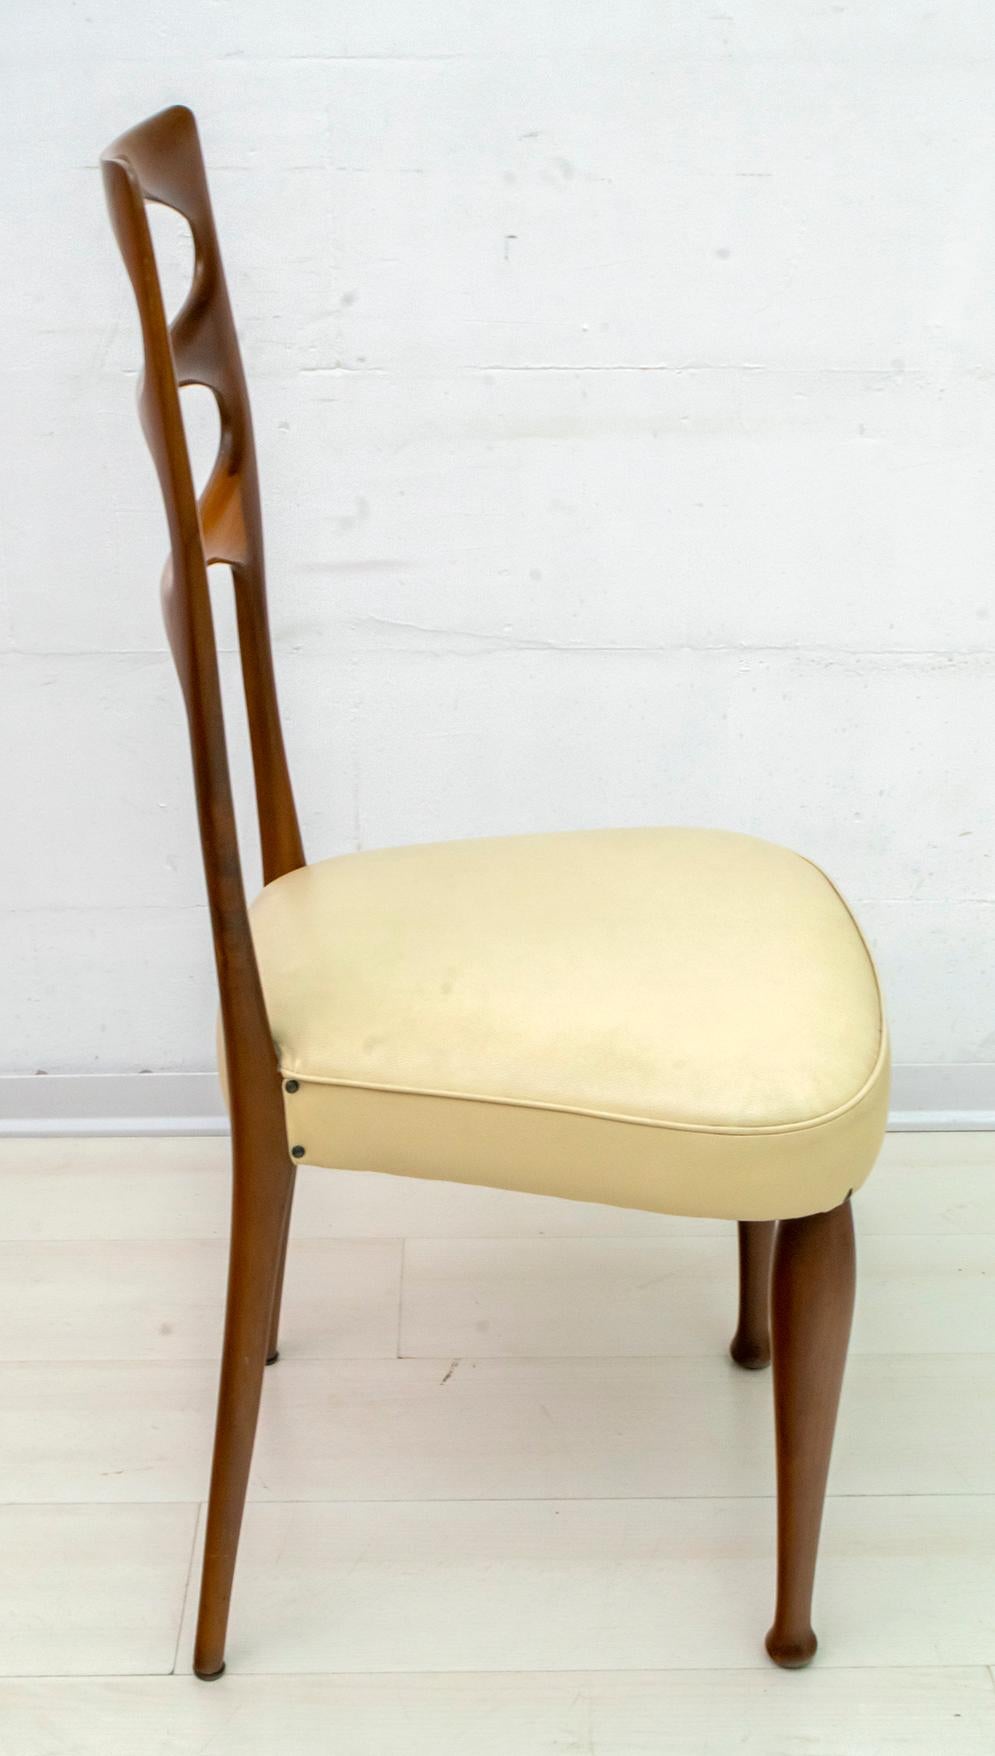 Six Vittorio Dassi Mid-Century Modern Italian Mahogany Dining Chairs, 1950s For Sale 3